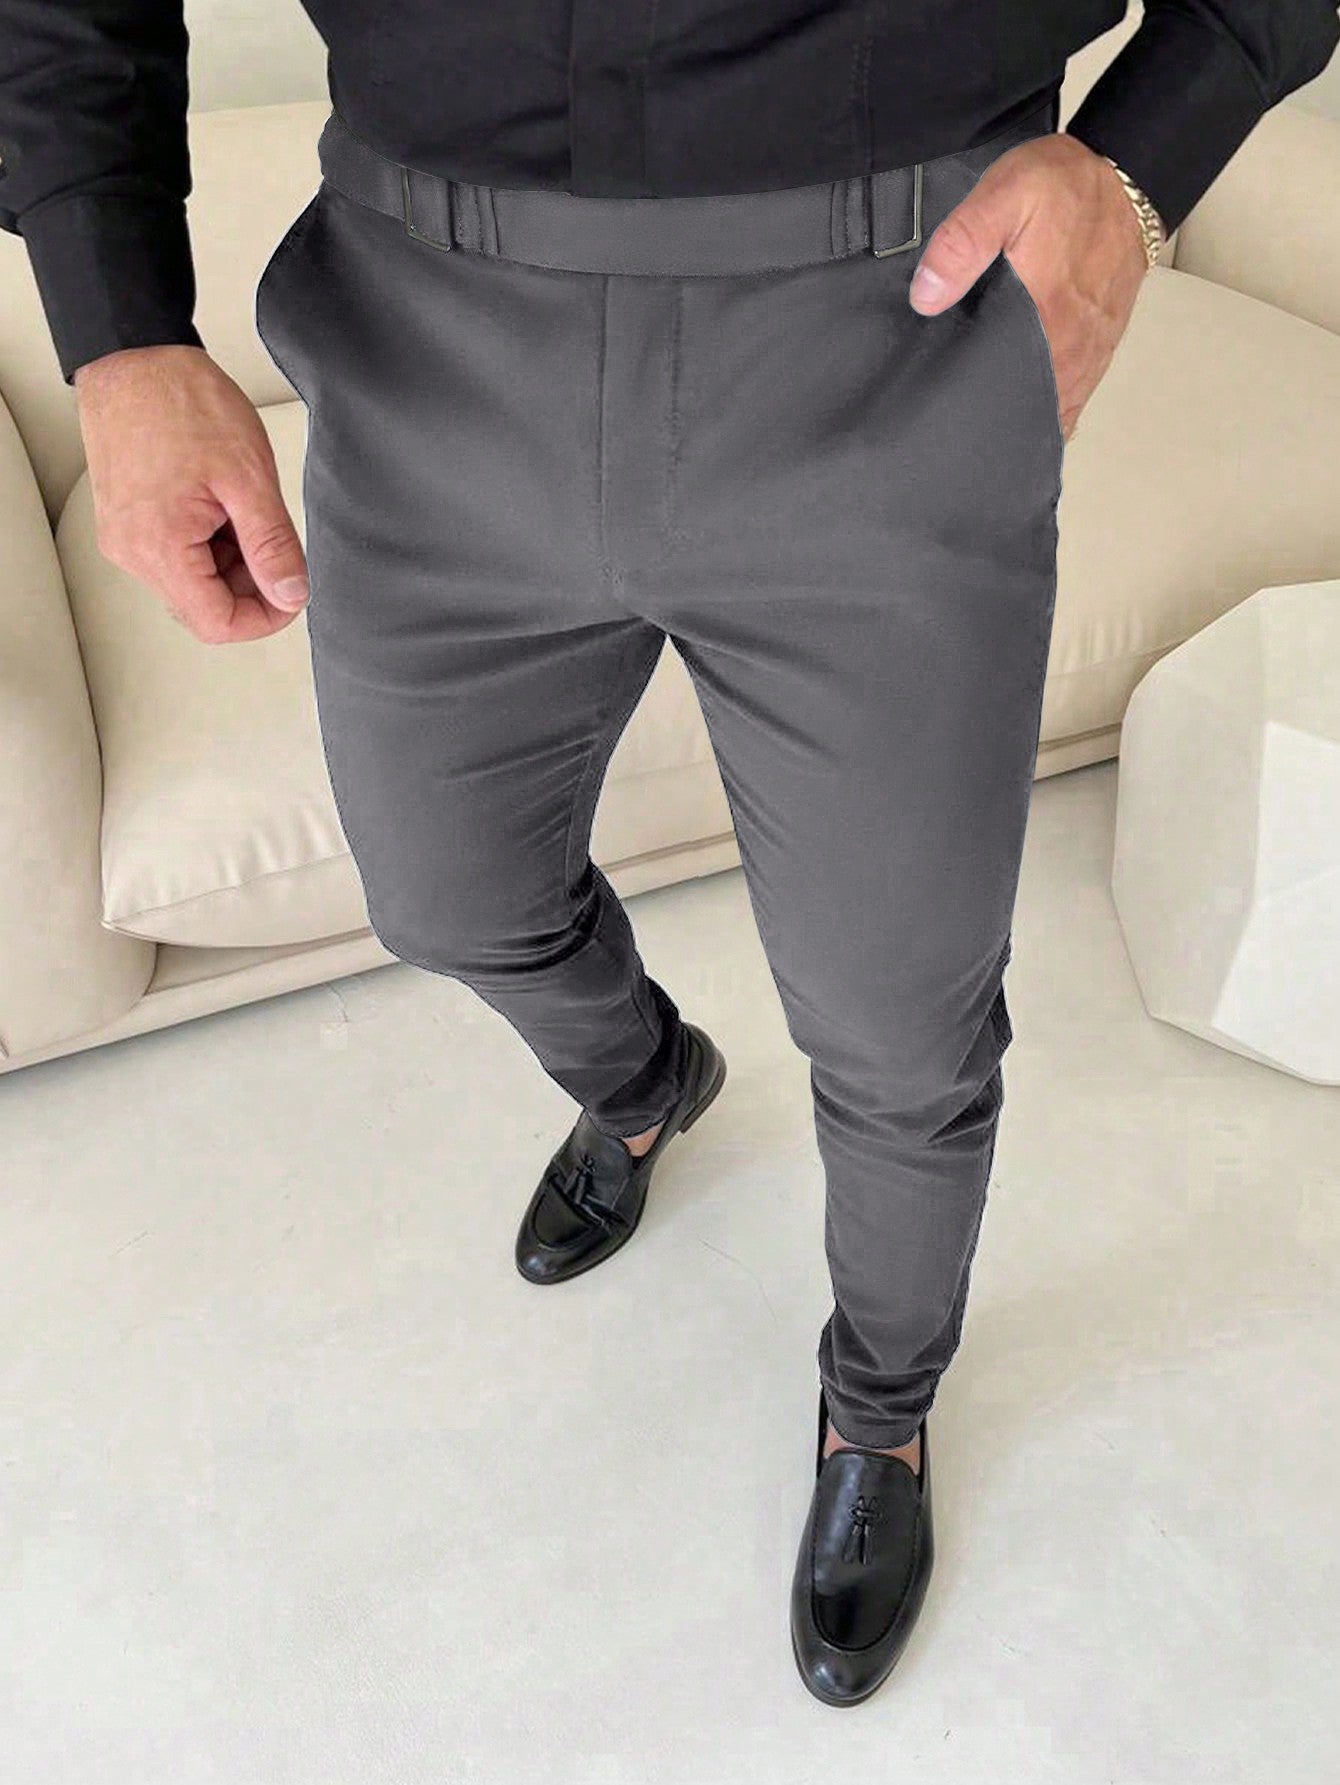 Manfinity Men's Solid Slim Fit Pants